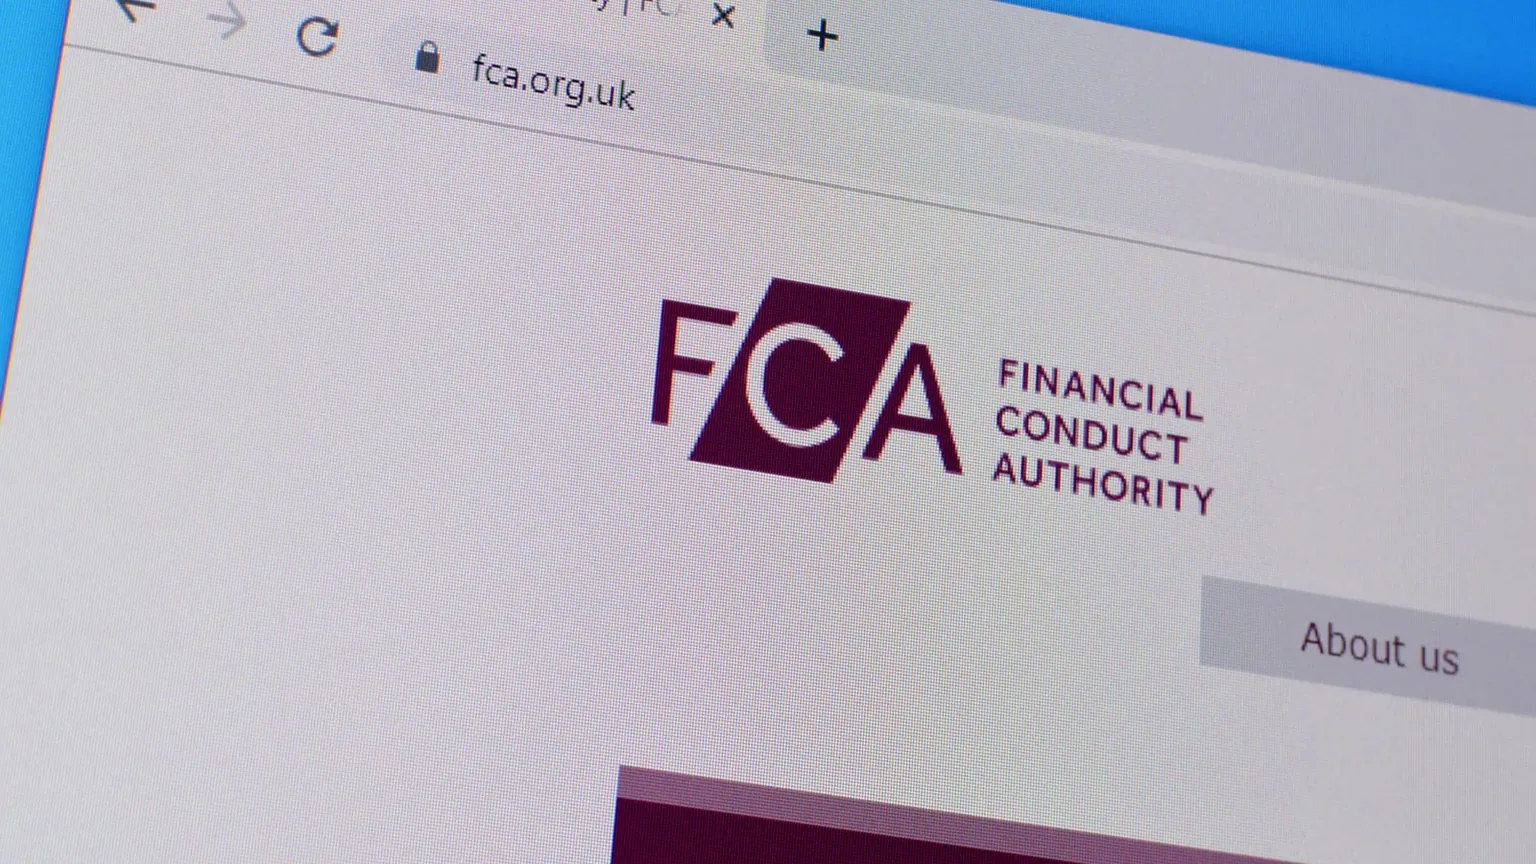 FCA website log in page.